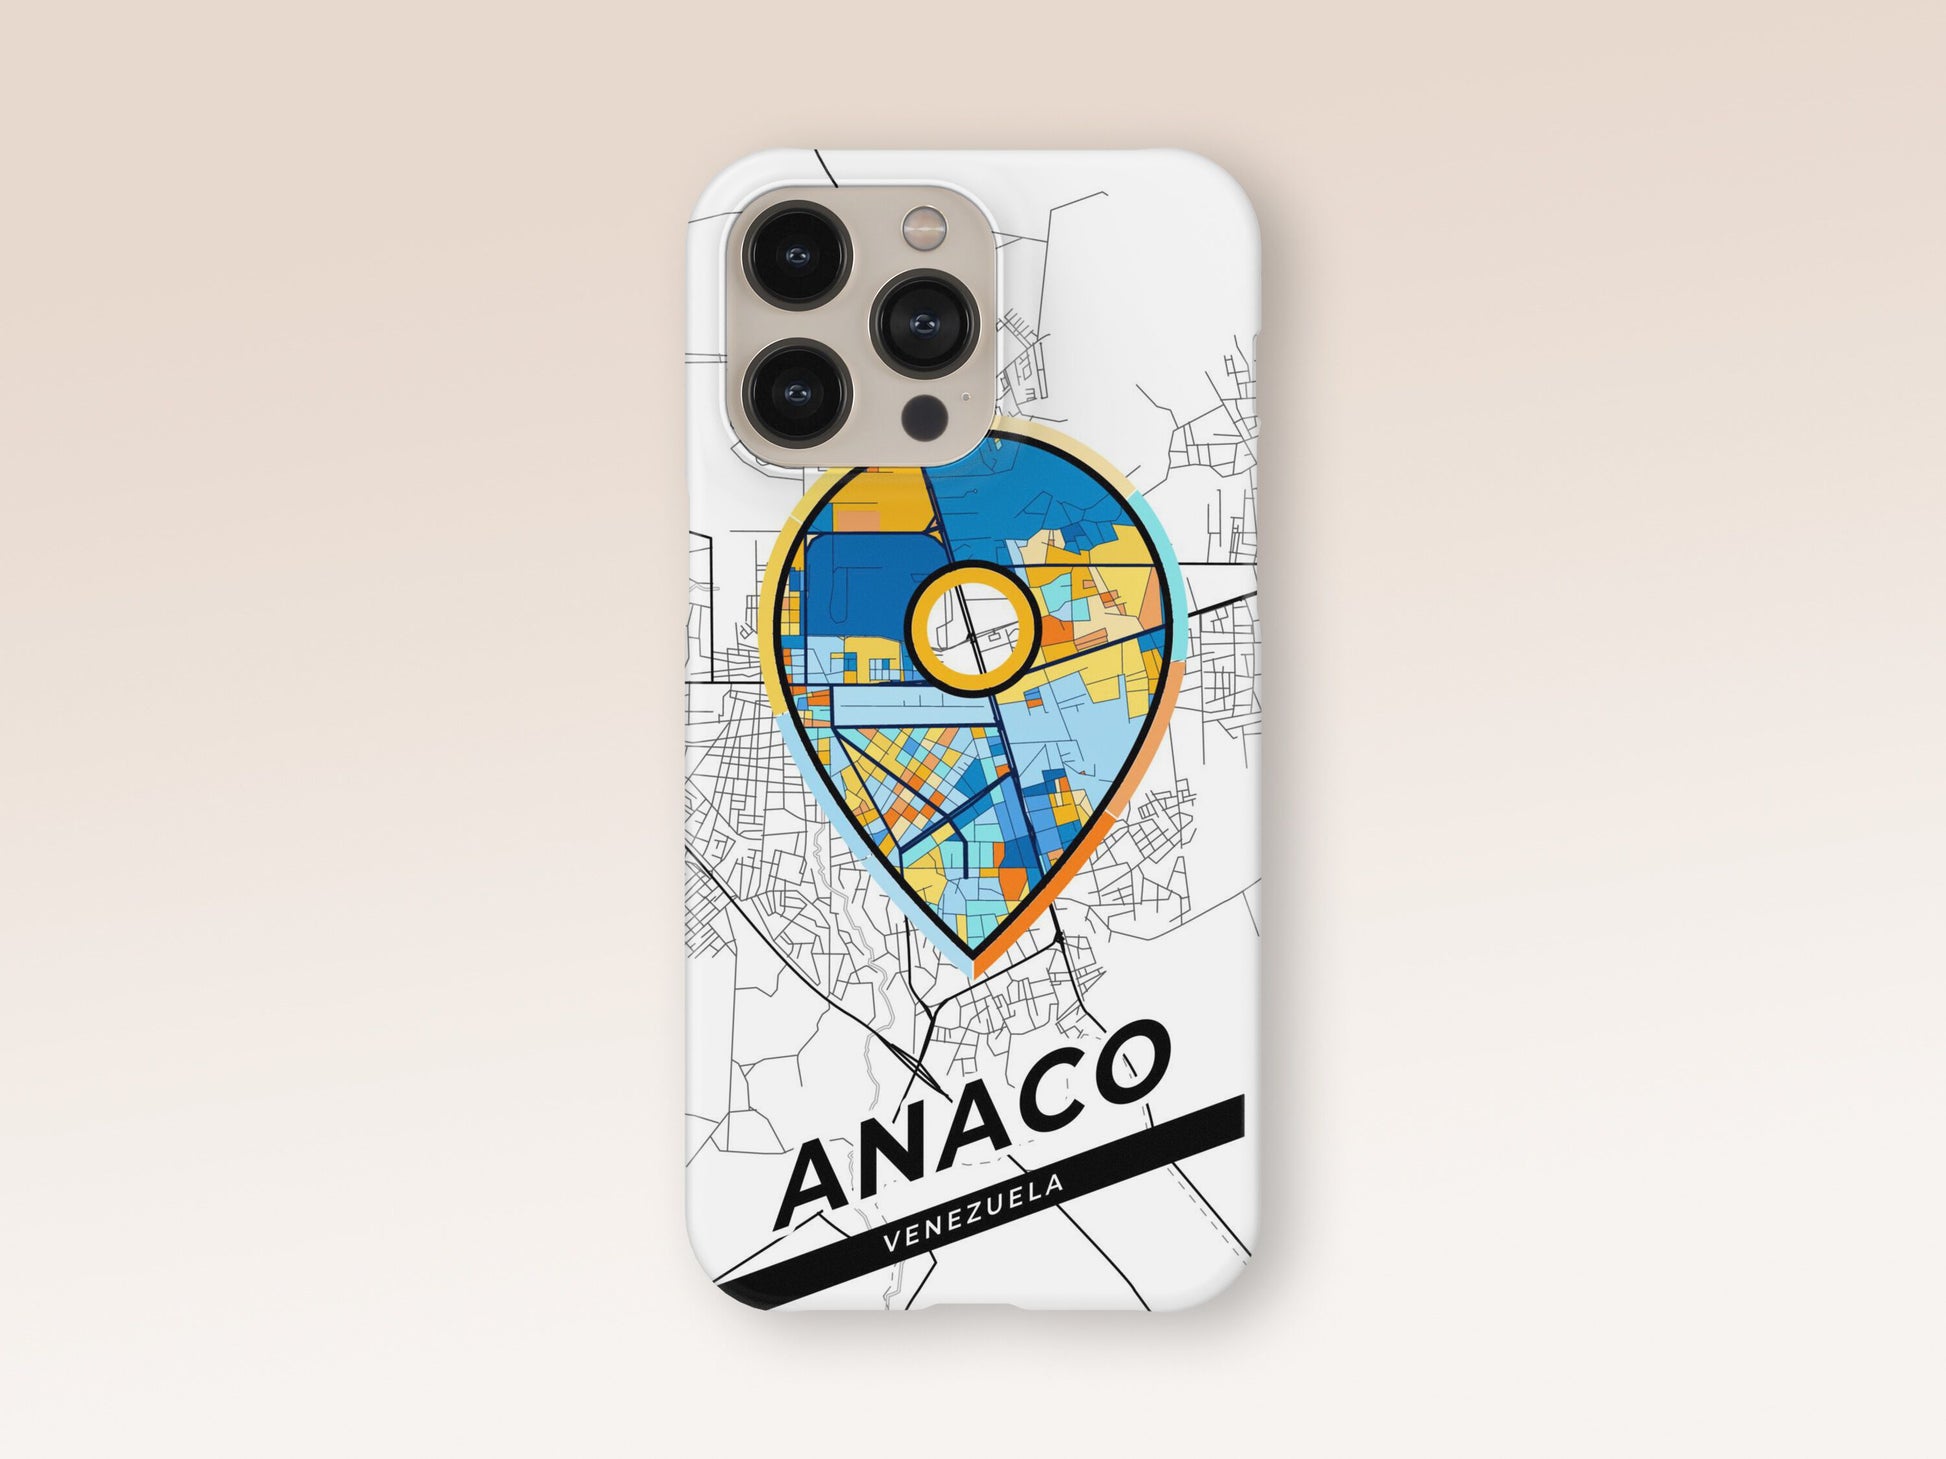 Anaco Venezuela slim phone case with colorful icon. Birthday, wedding or housewarming gift. Couple match cases. 1